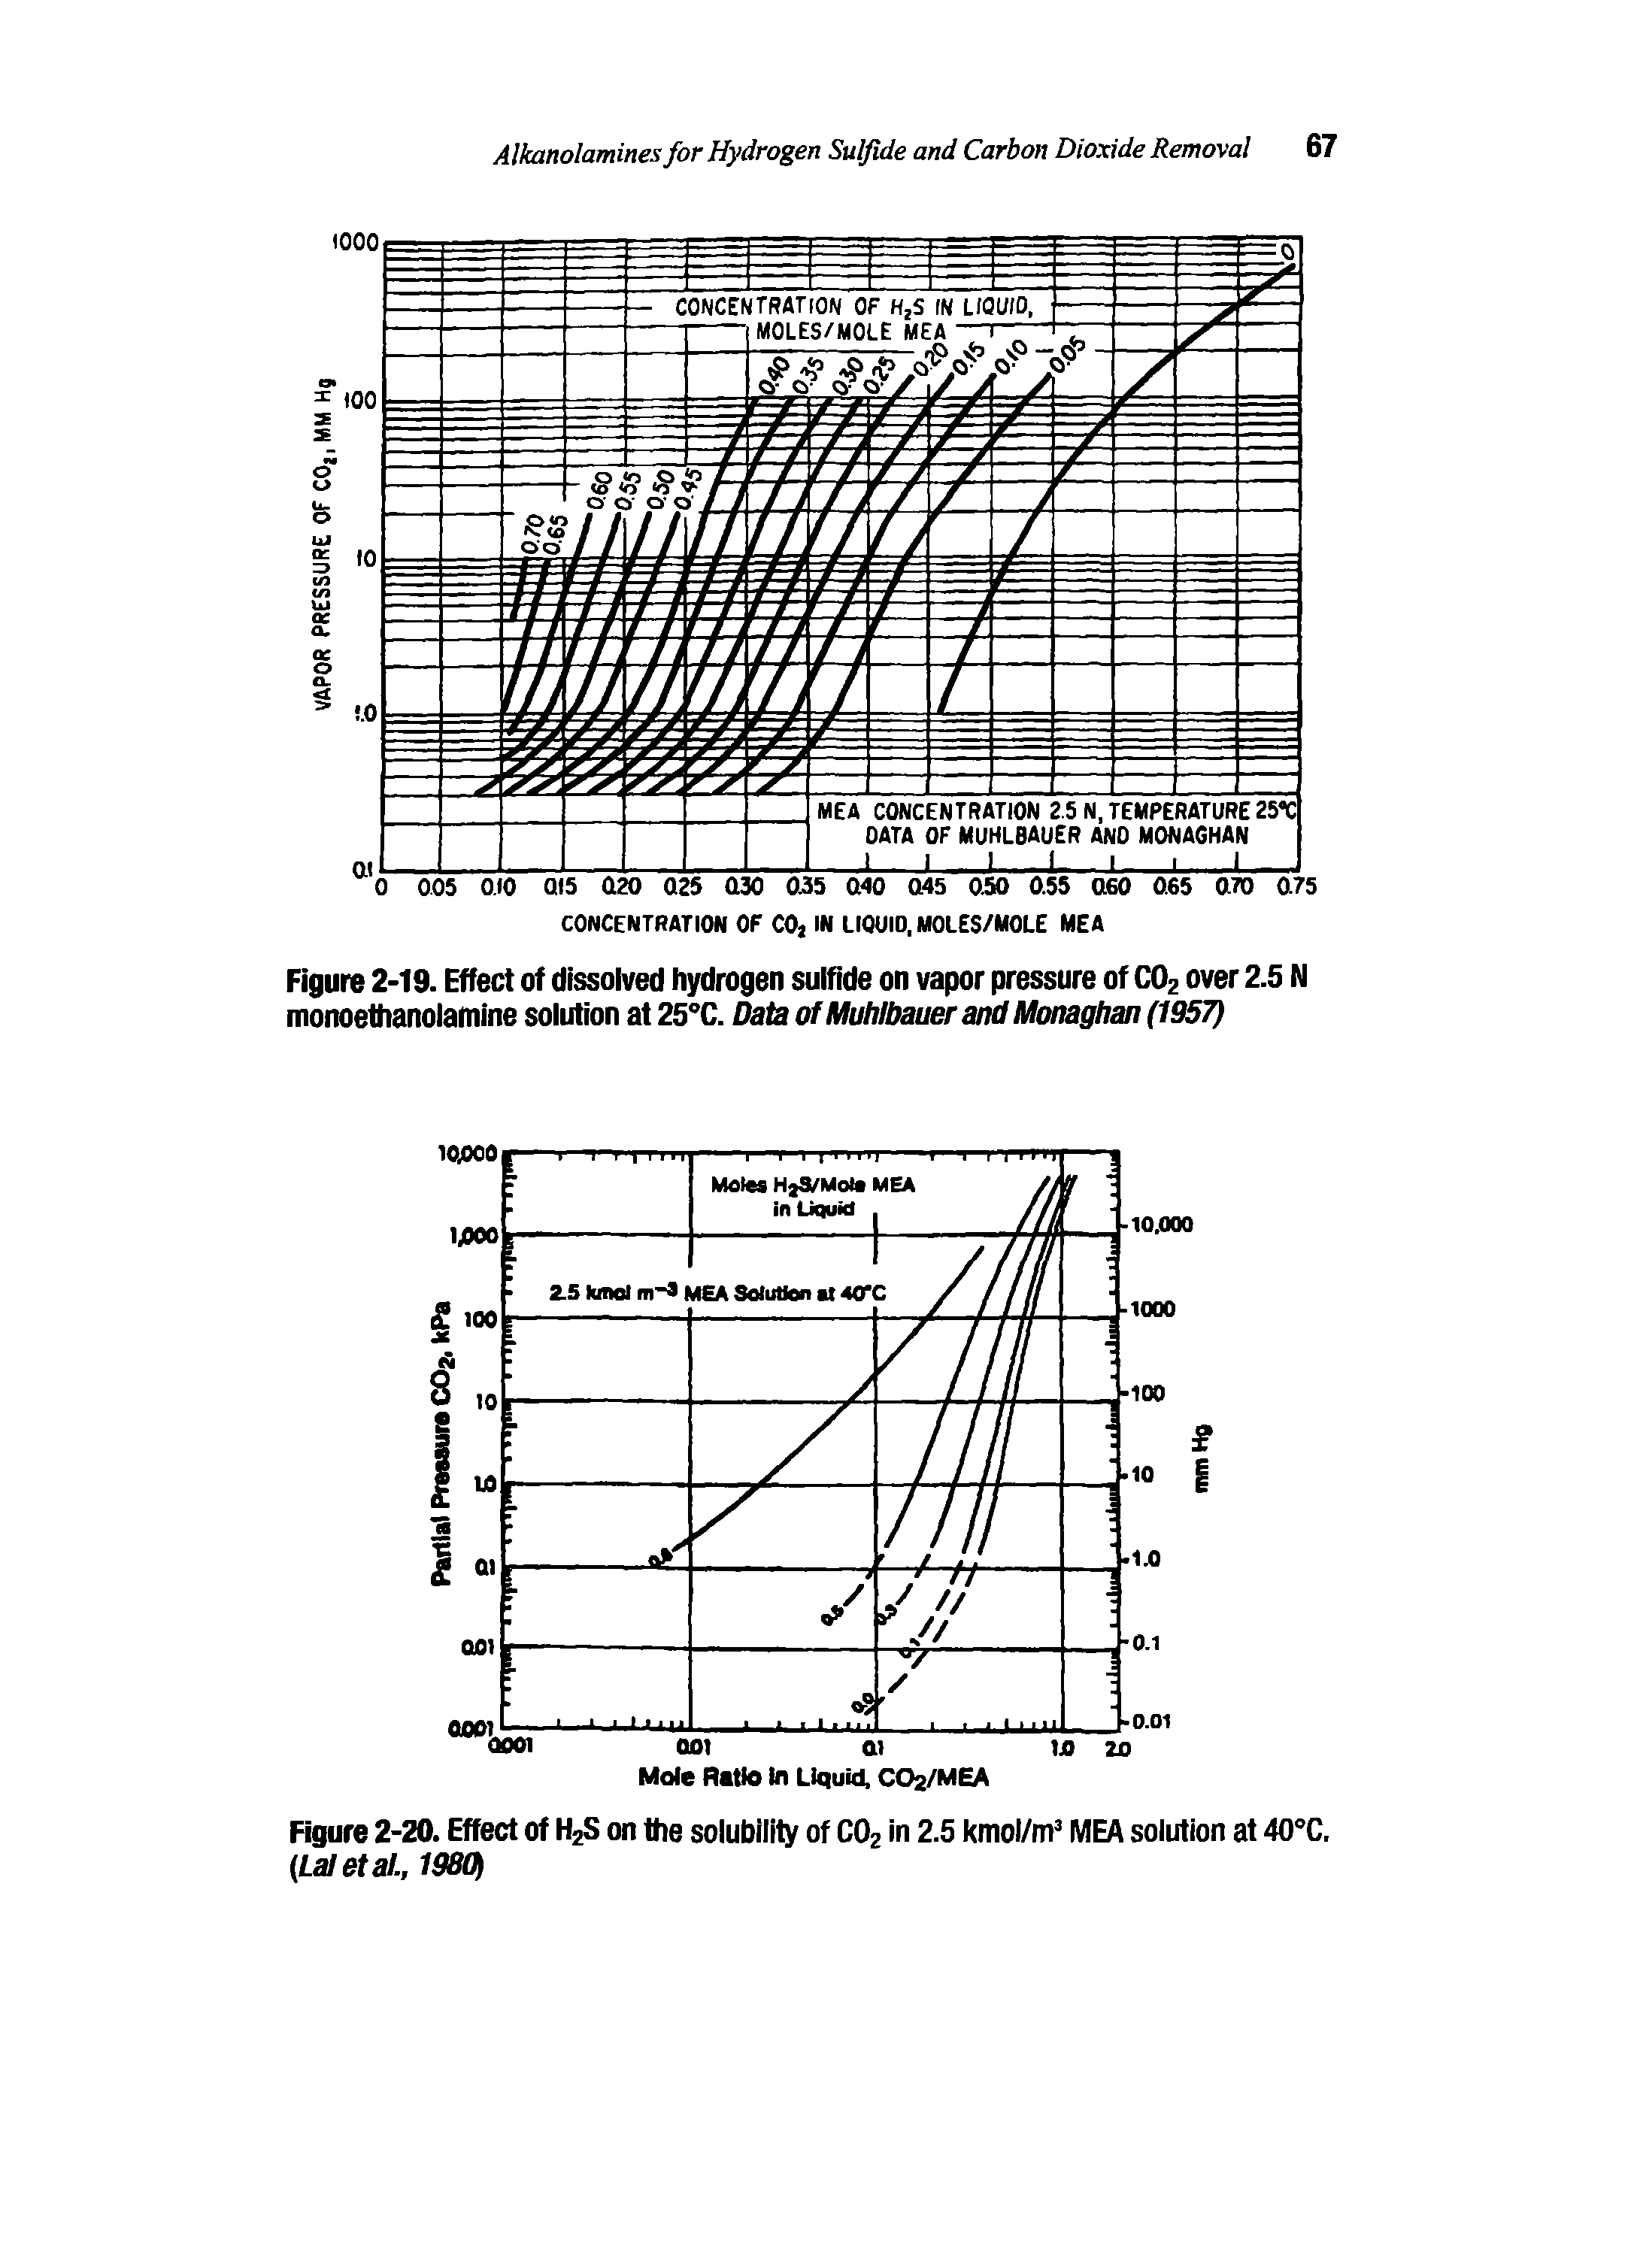 Figure 2-19. Effect of dissolved hydrogen sulfide on vapor pressure of CO2 over 2.5 N monoethanolamine solution at 25°C. Data ofllluhlbaueranillilhm ian (1957)...